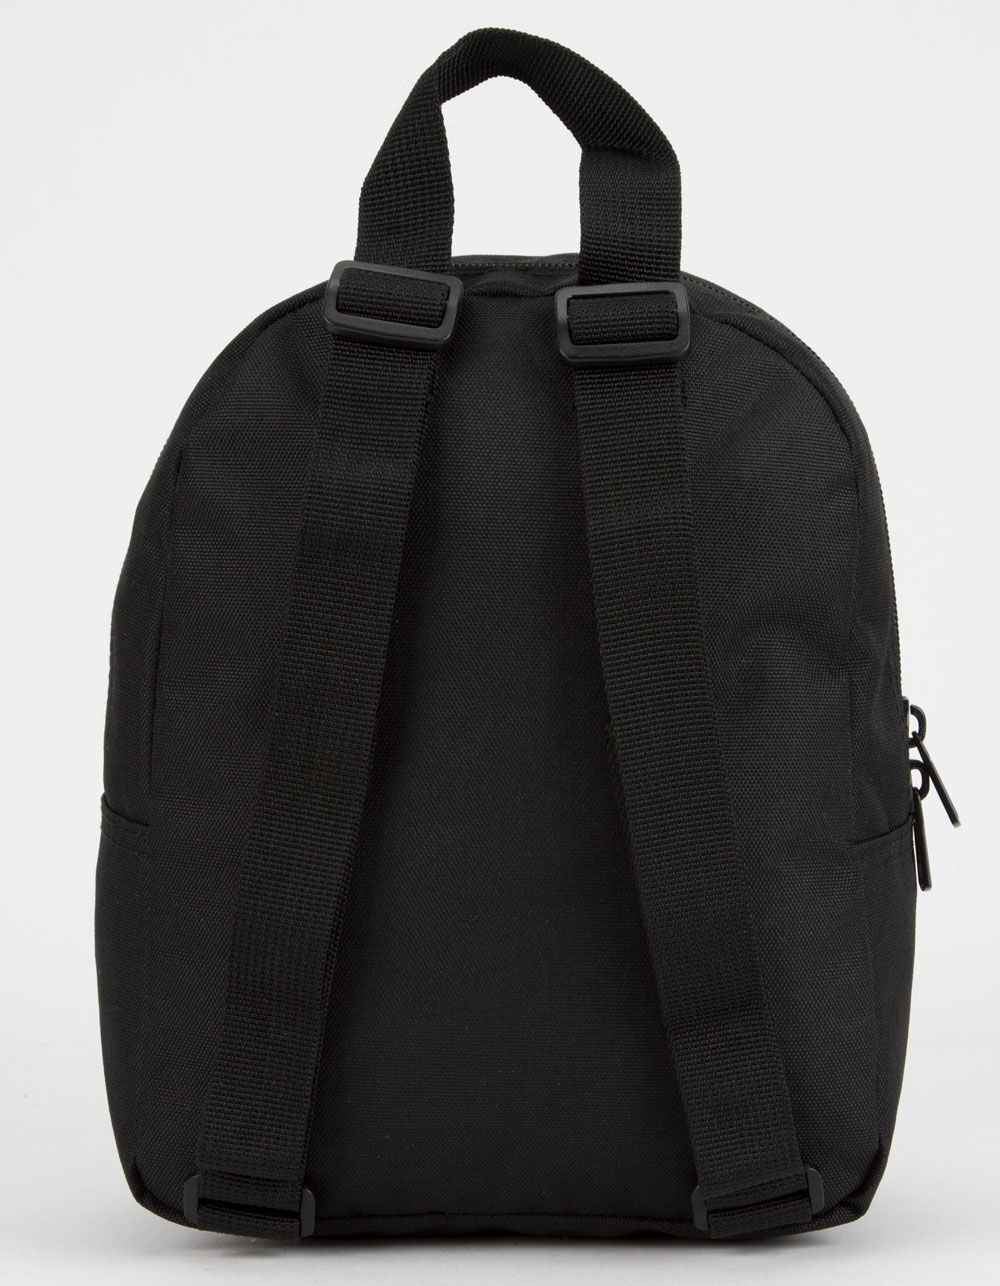 VANS Got This Black Mini Backpack image number 2